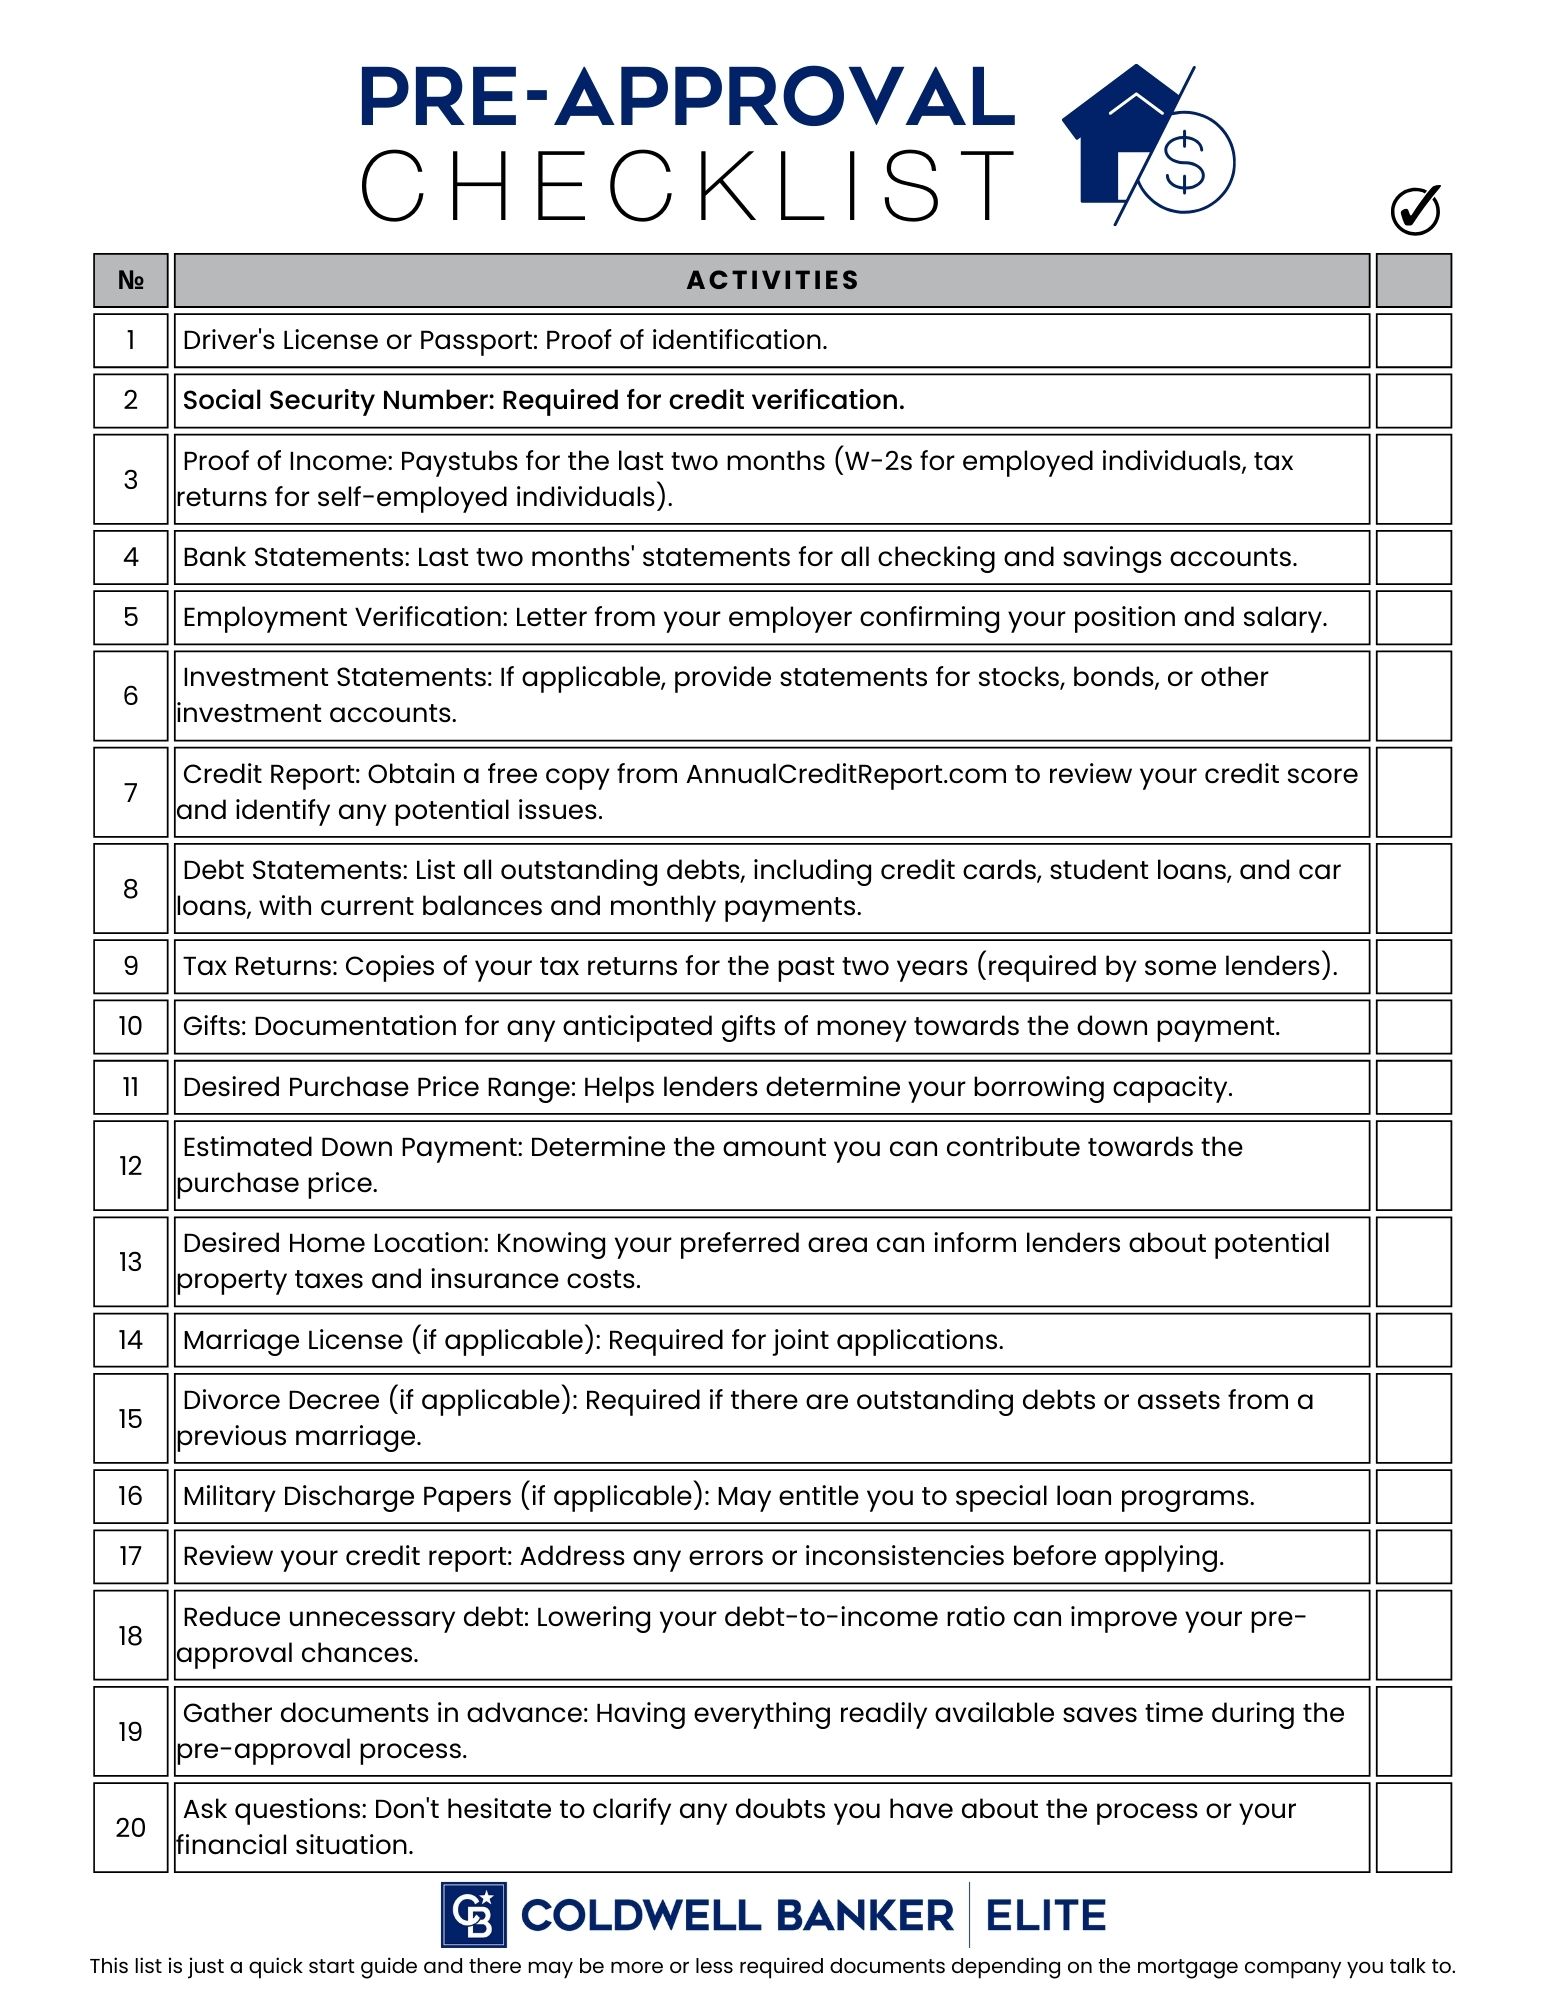 CBE Loan Pre-Approval checklist